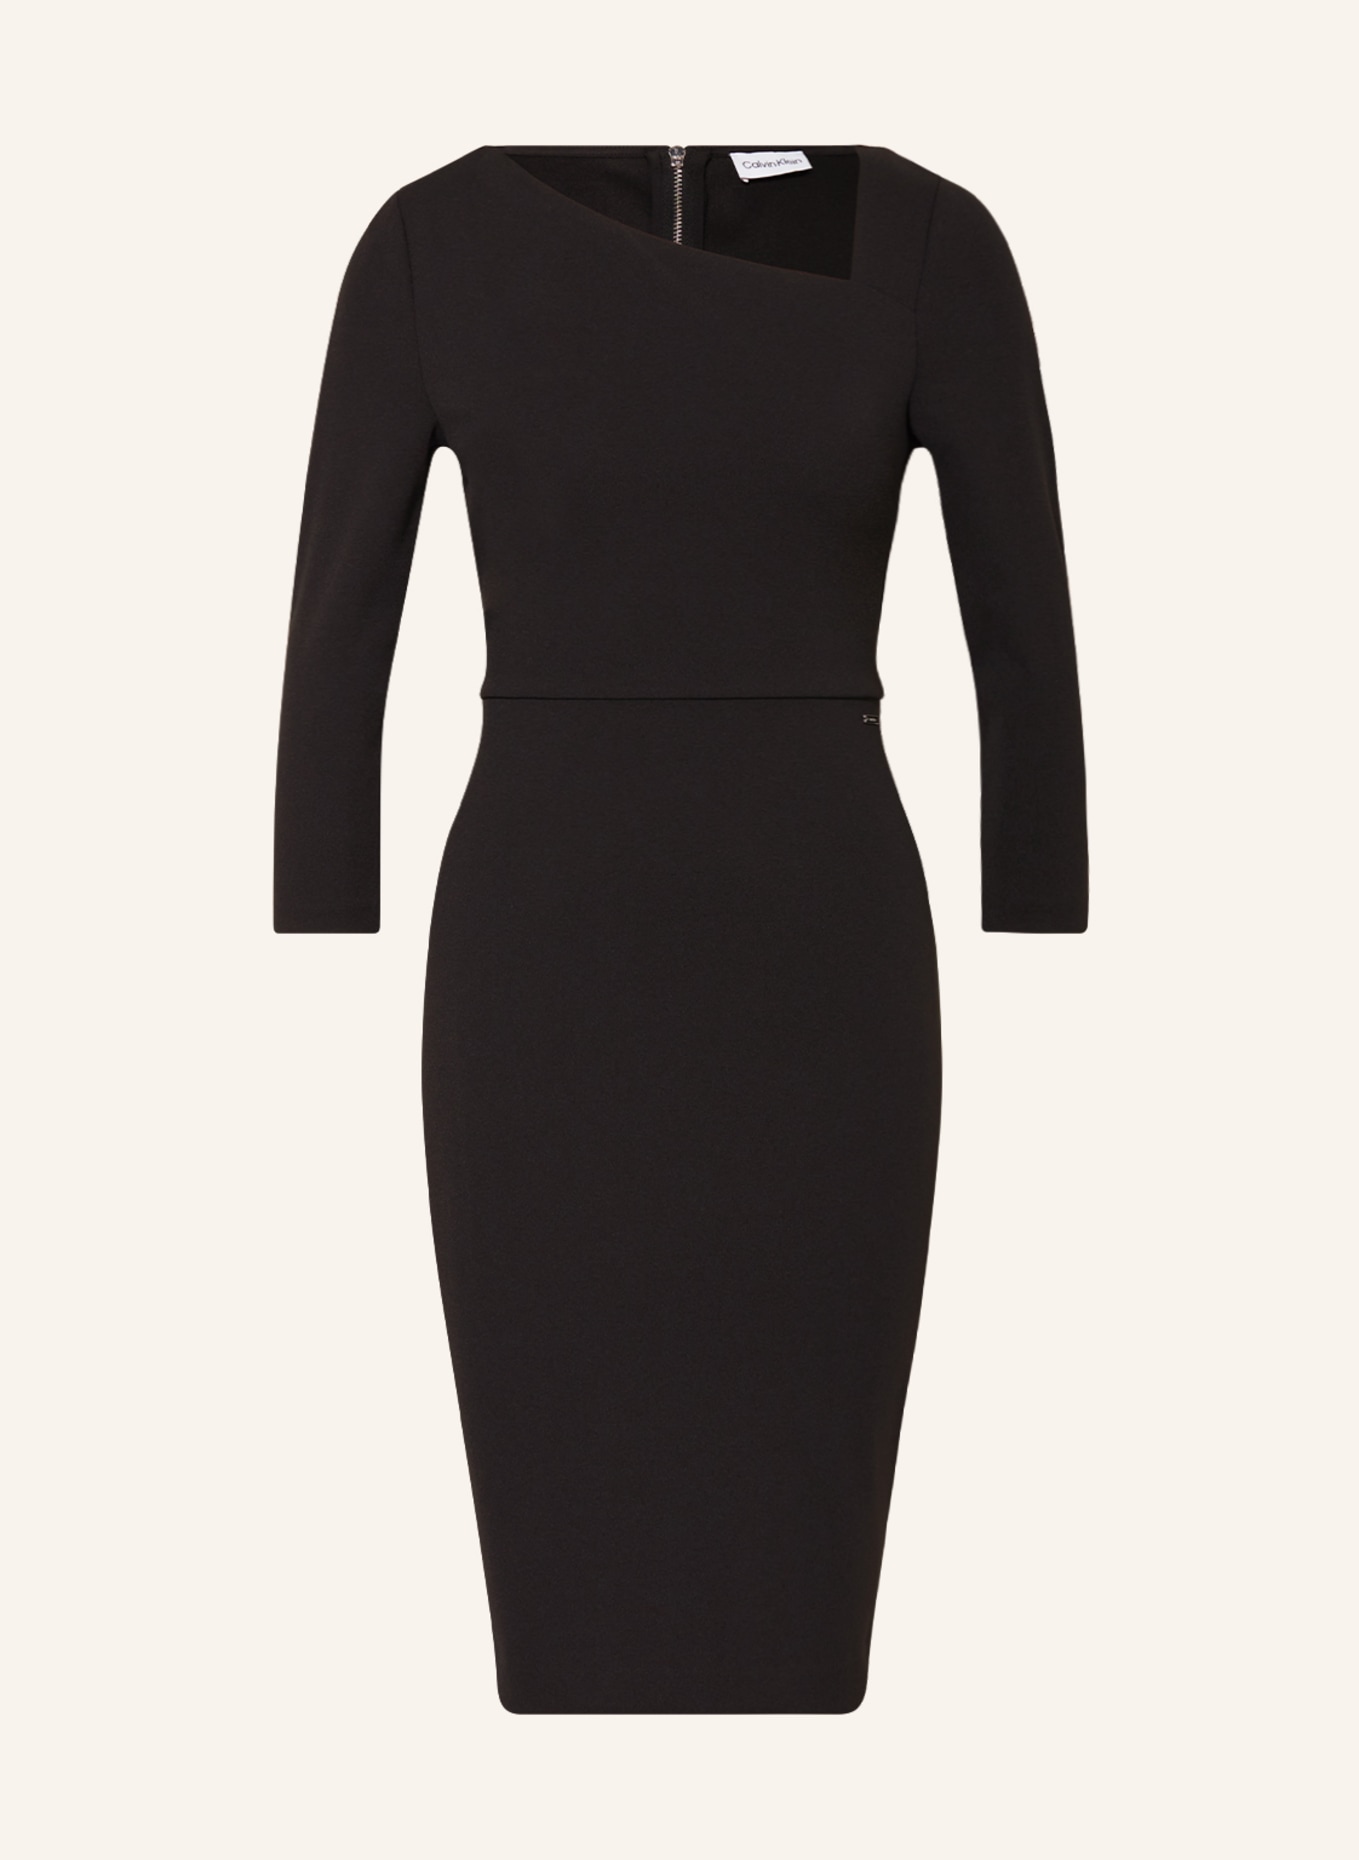 Calvin Klein Women's 3/4 Sleeve Dress~Embellished~Jewels~NWT~Black~Sz 8